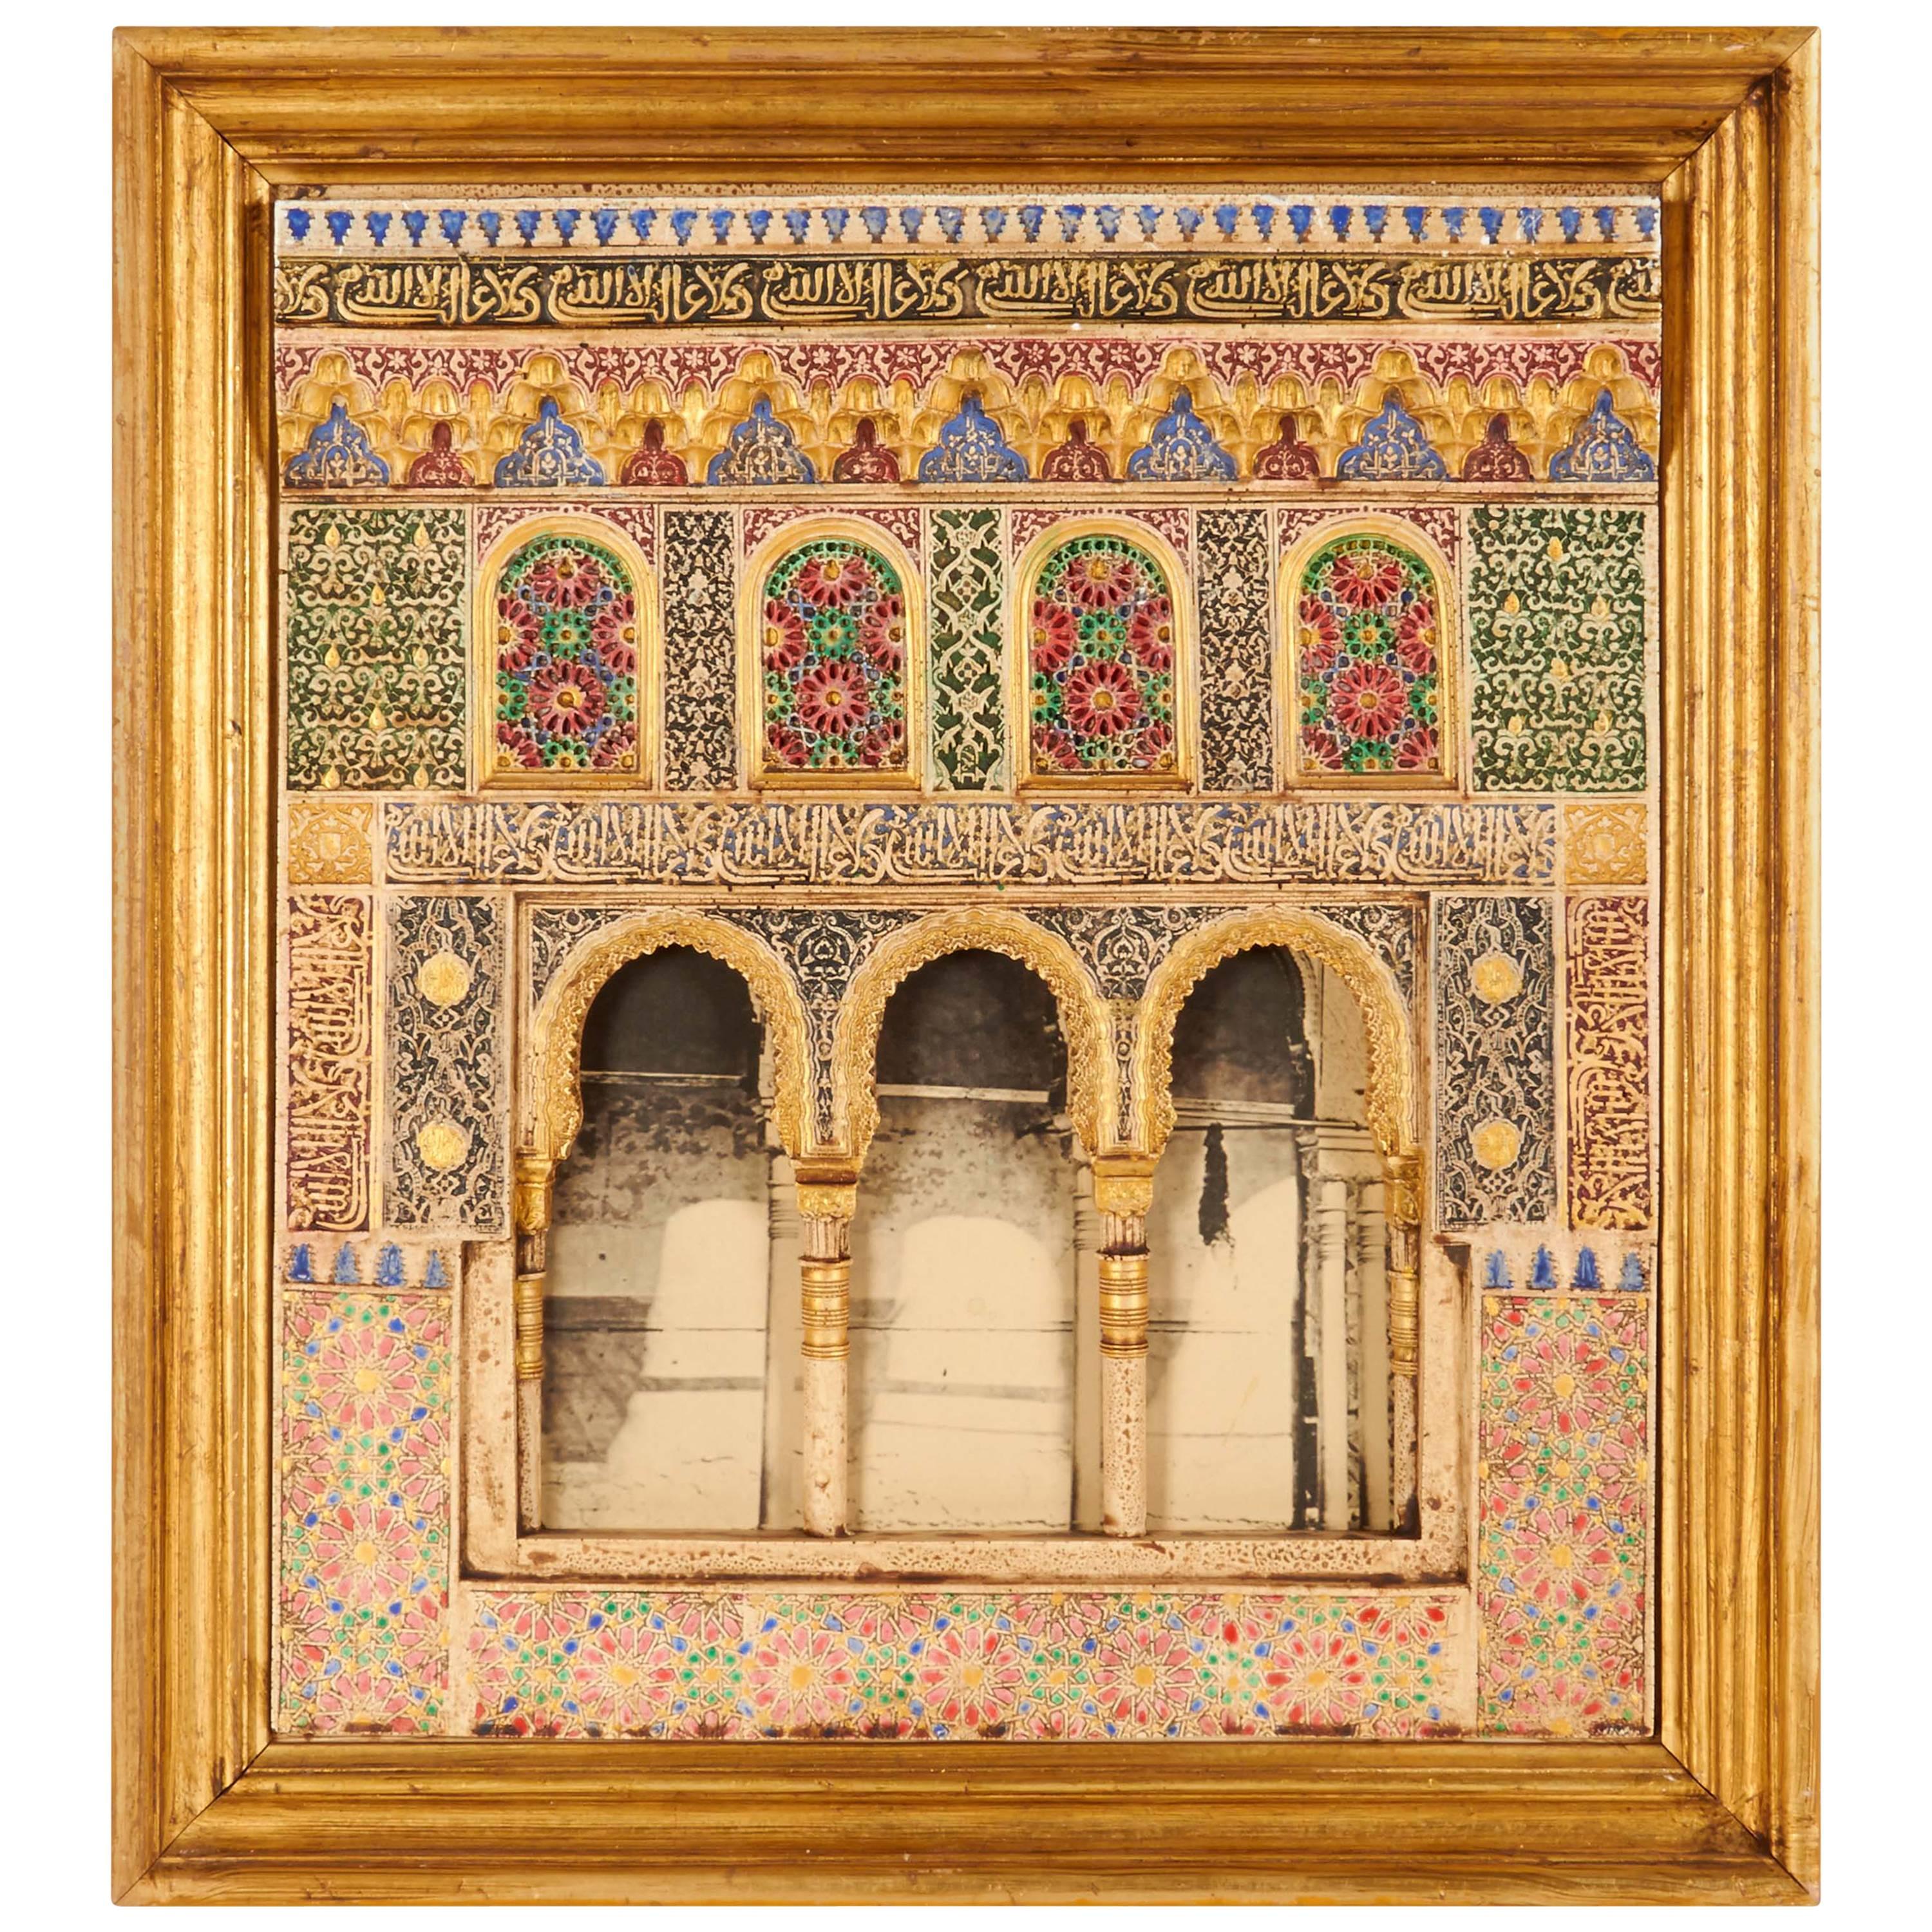 Spanish Plaster Wall Plaque Depicting the Alhambra Moorish Islamic Taste